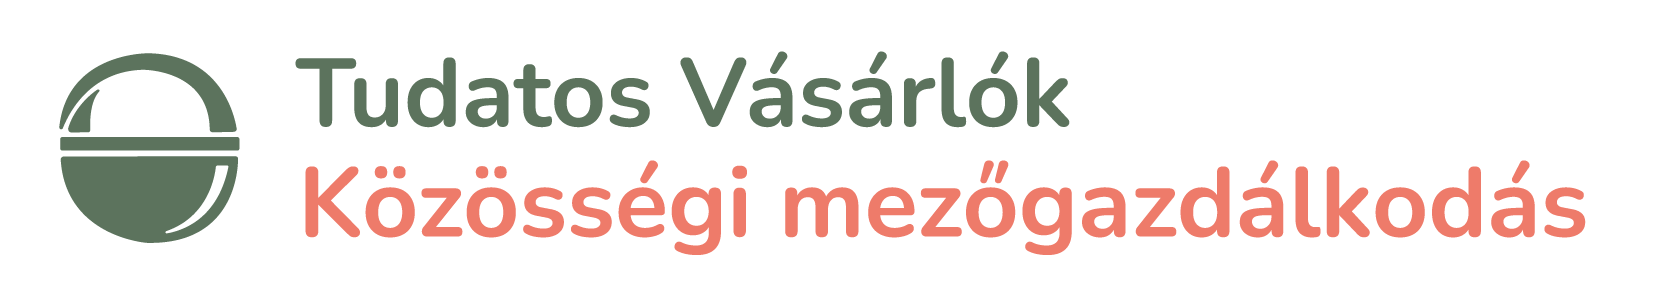 Tudatos_Vasarlok_Közössegi_mezogazdalkodas logo